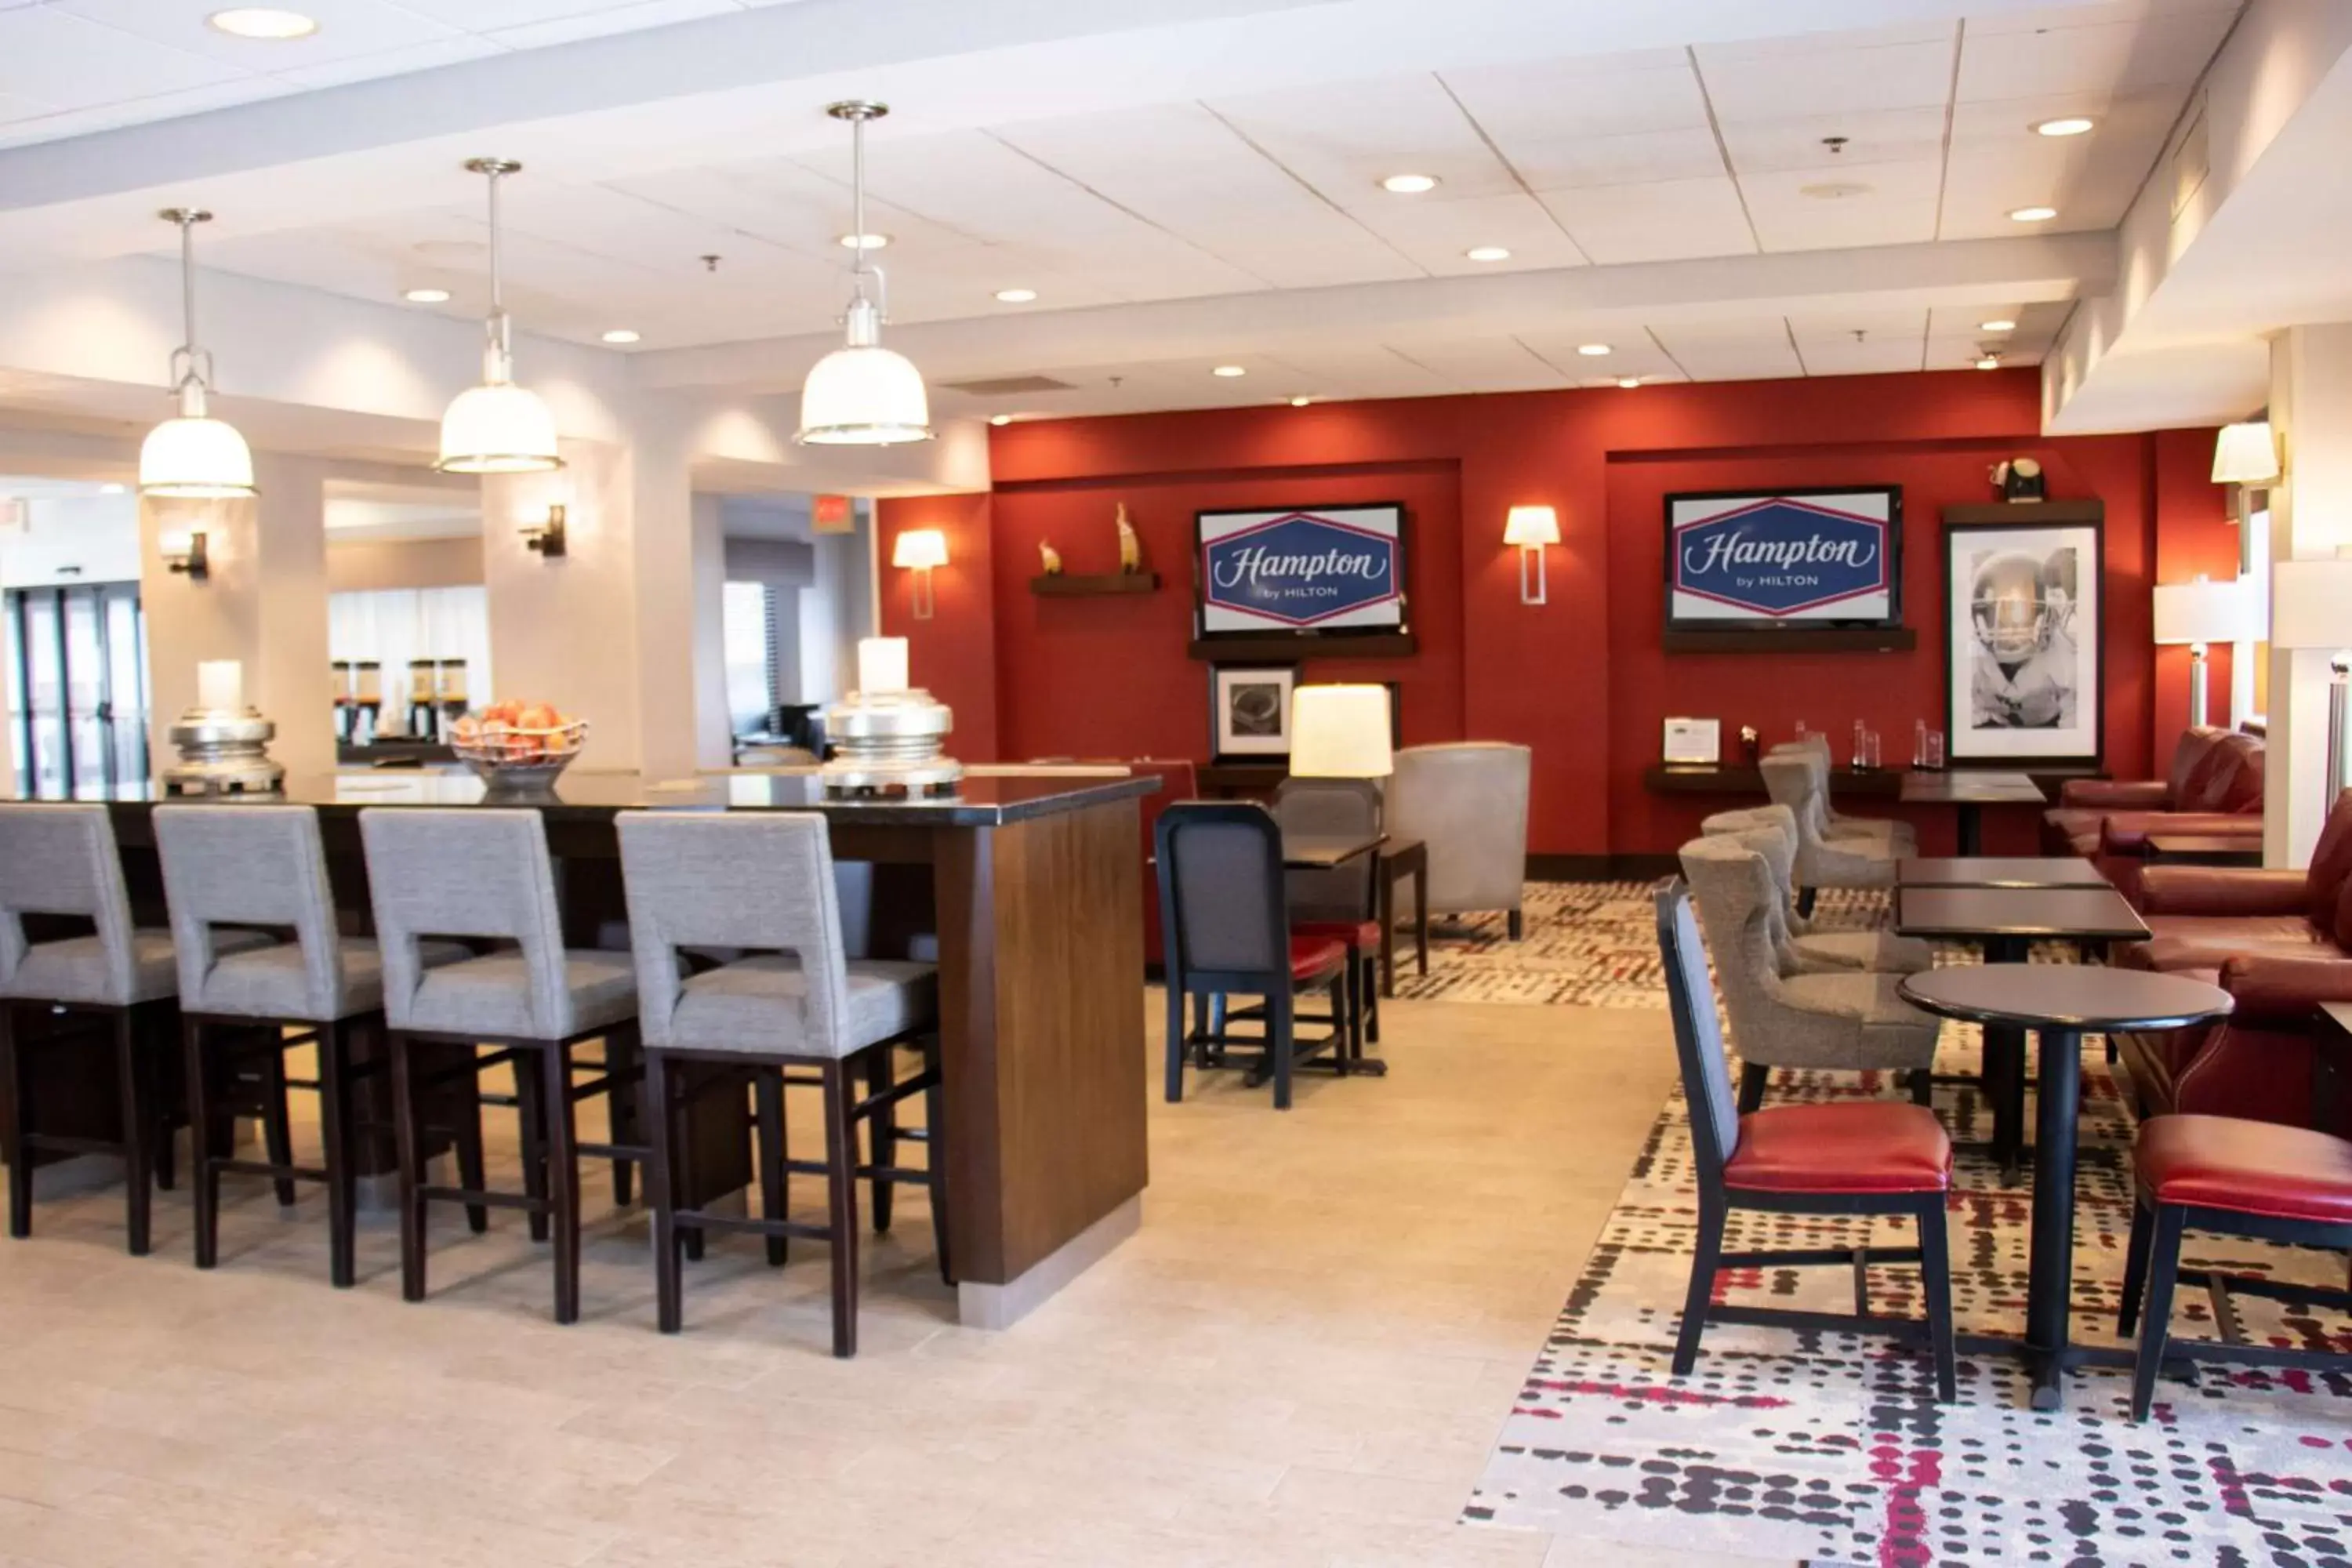 Lobby or reception, Restaurant/Places to Eat in Hampton Inn Tuscaloosa-University